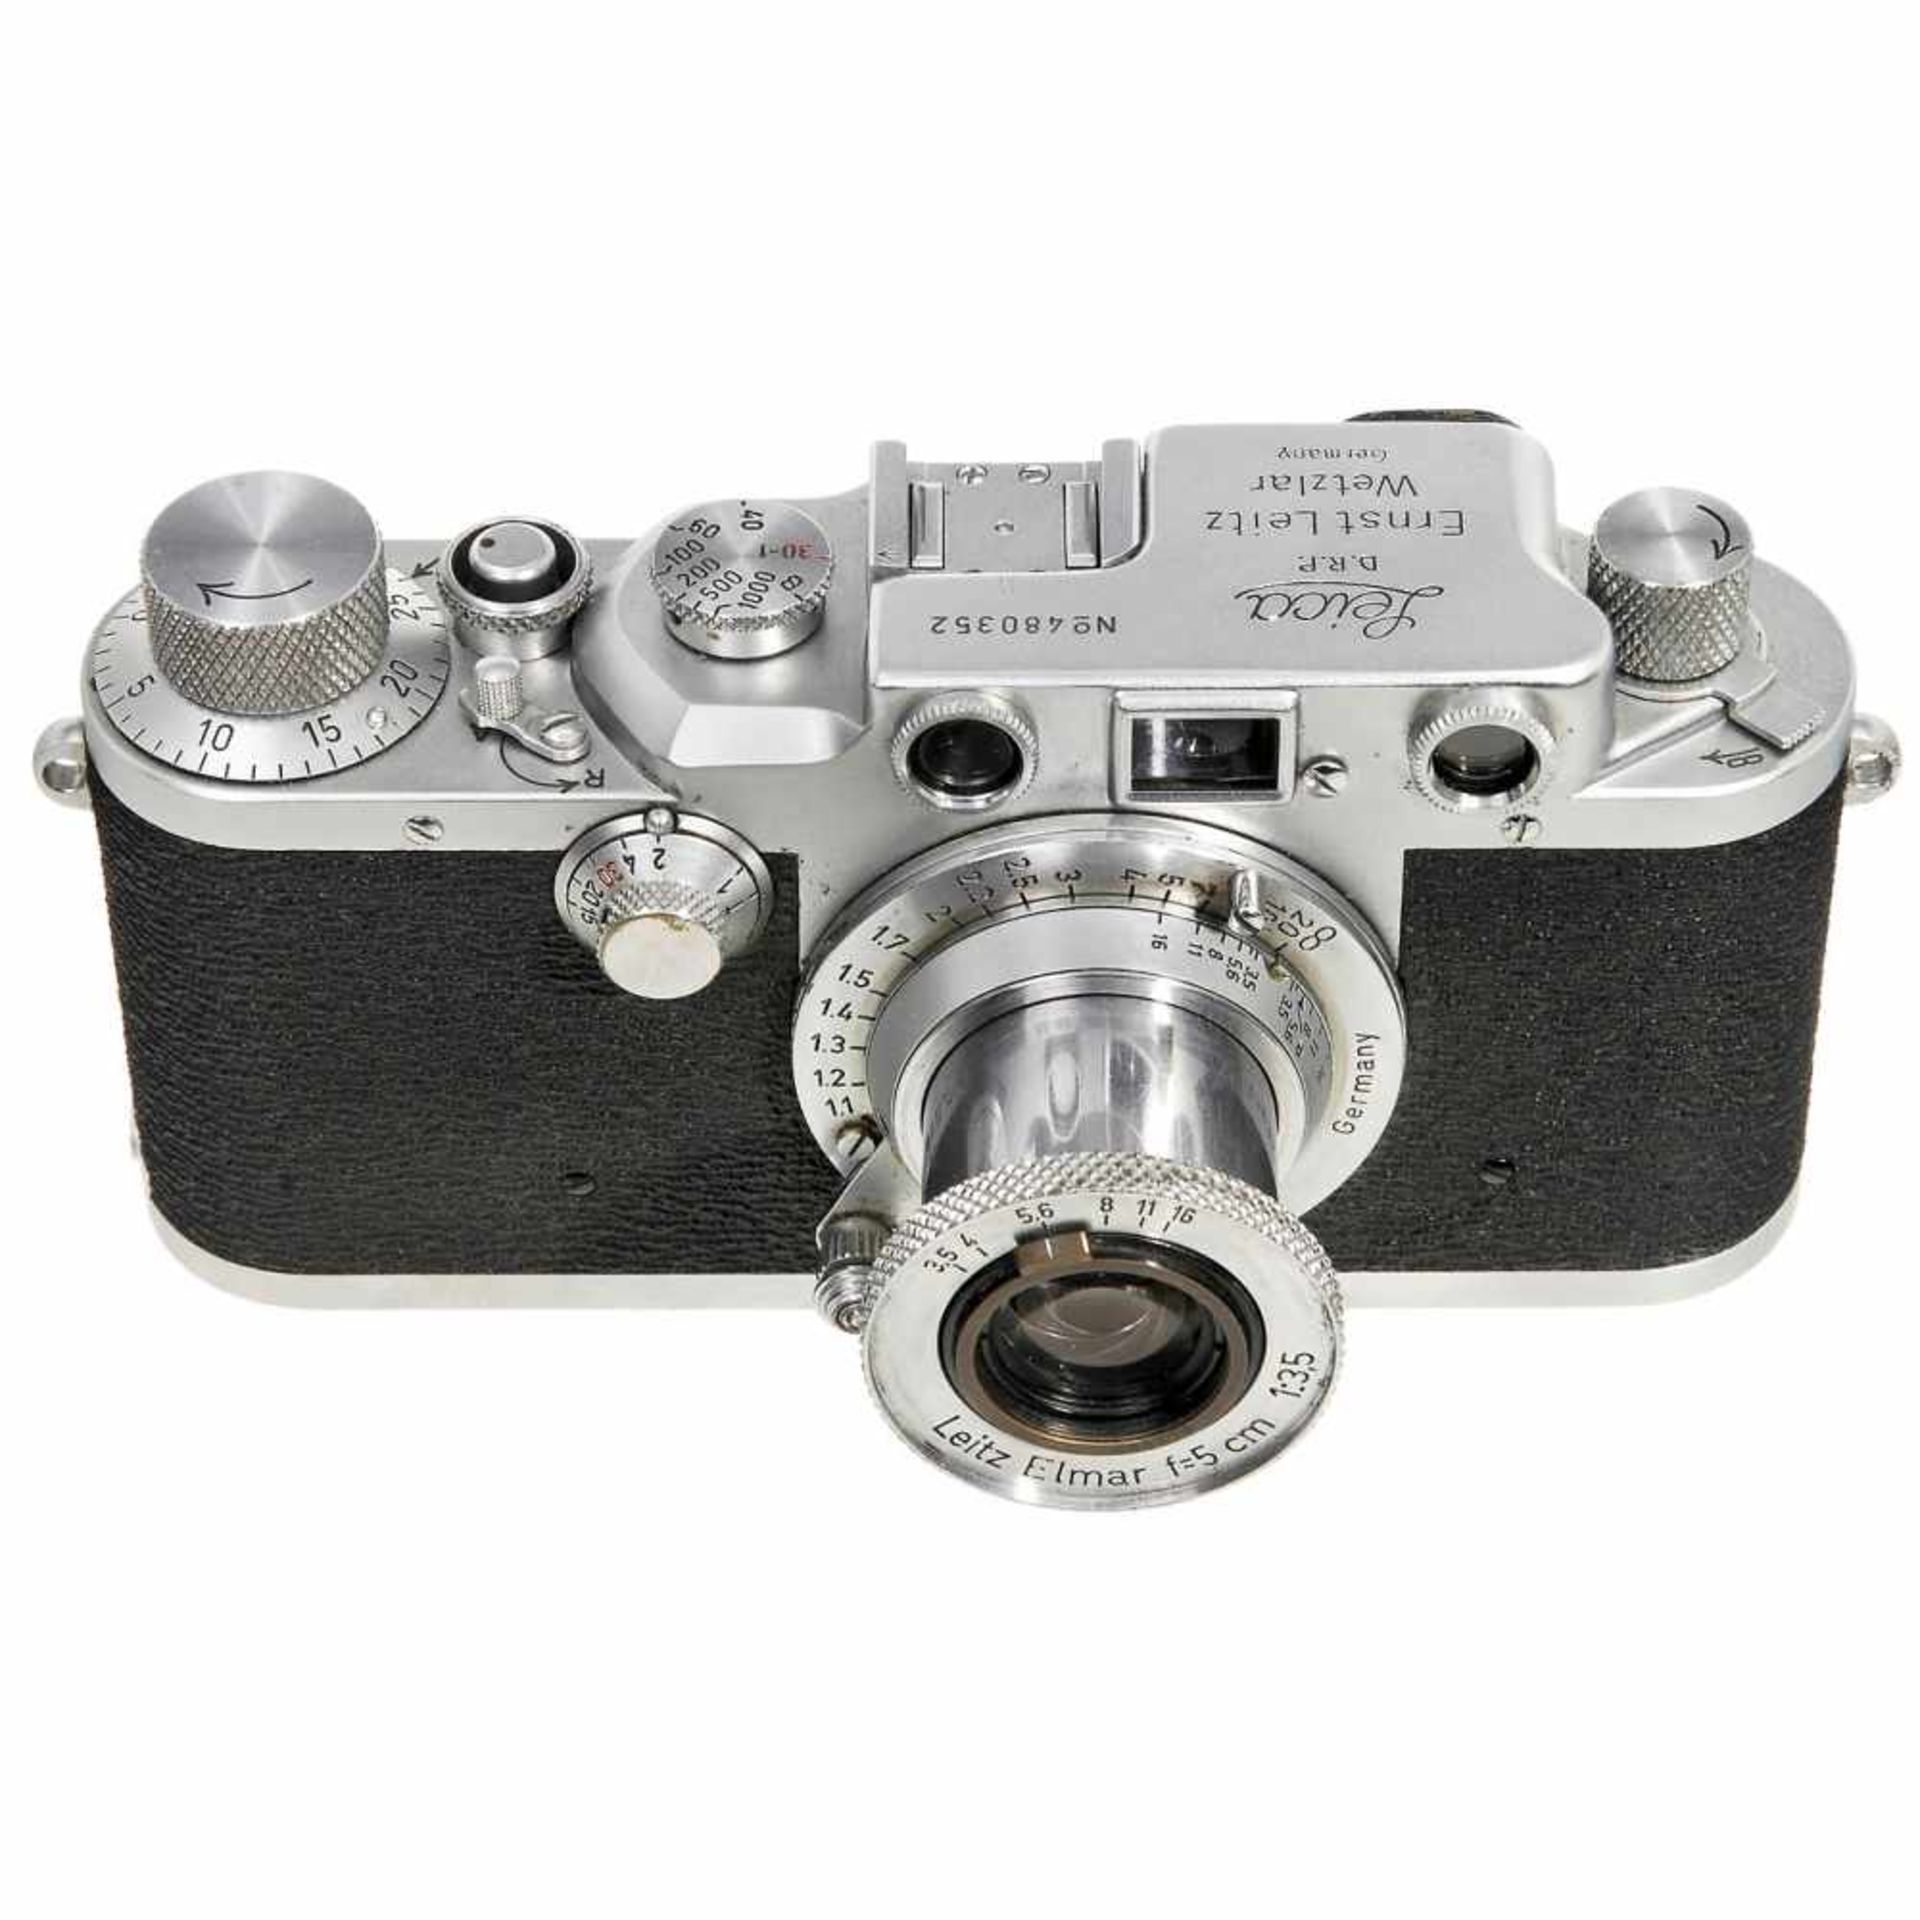 Leica IIIc (Sharkskin) mit Elmar 3,5/5 cm, um 1949